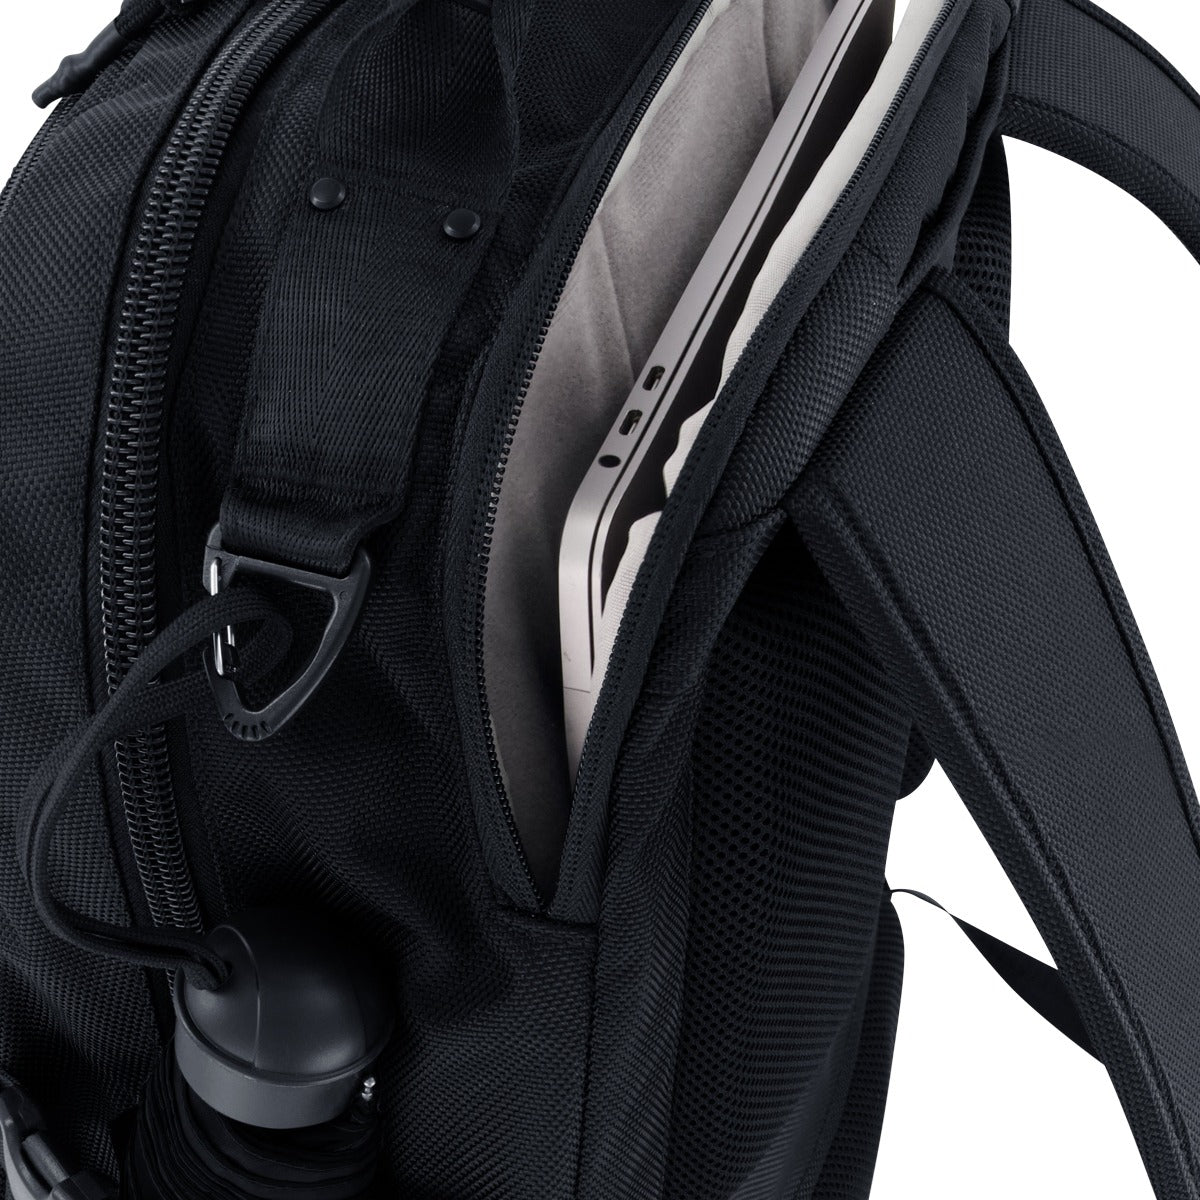 ful tactics collection division backpack black - technology safe backpacks